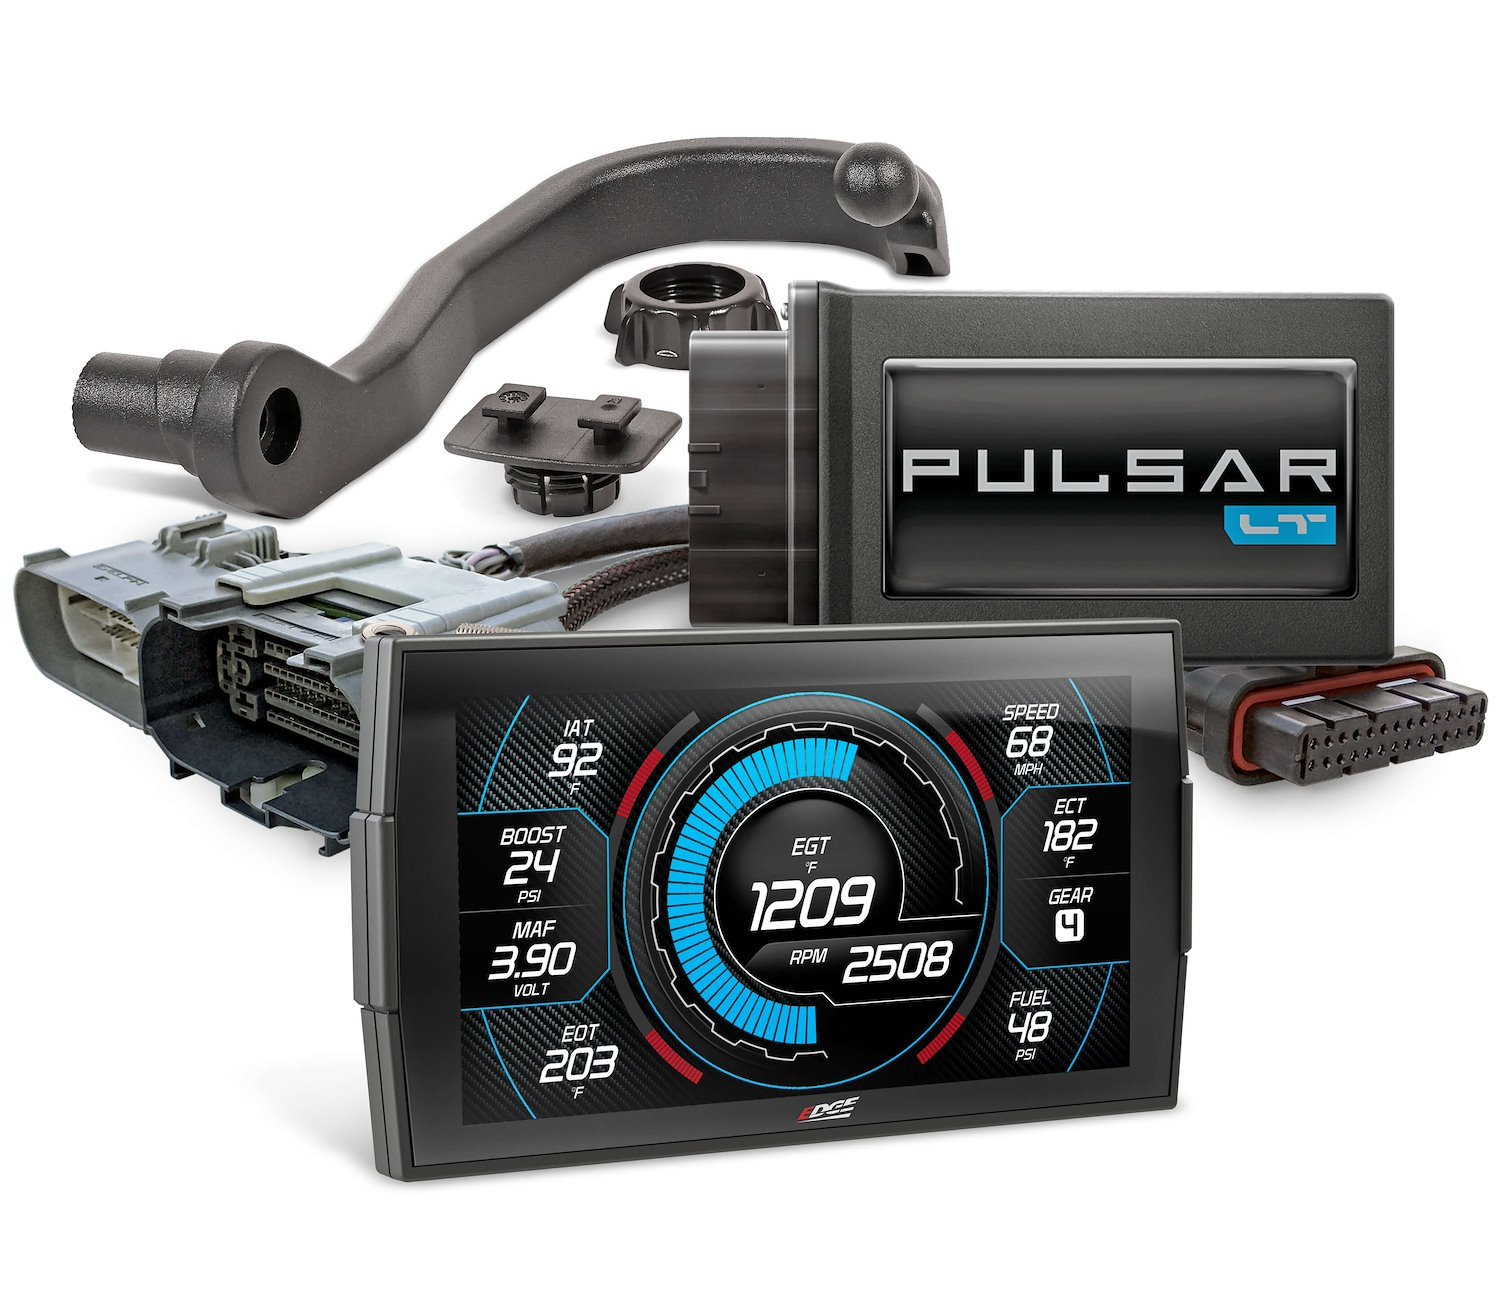 Pulsar LT In-Line Tuning Module + Insight CTS3 Monitor Kit 2015-2016 Chevy Silverado, GMC Sierra 2500/3500 HD LML 6.6L Duramax